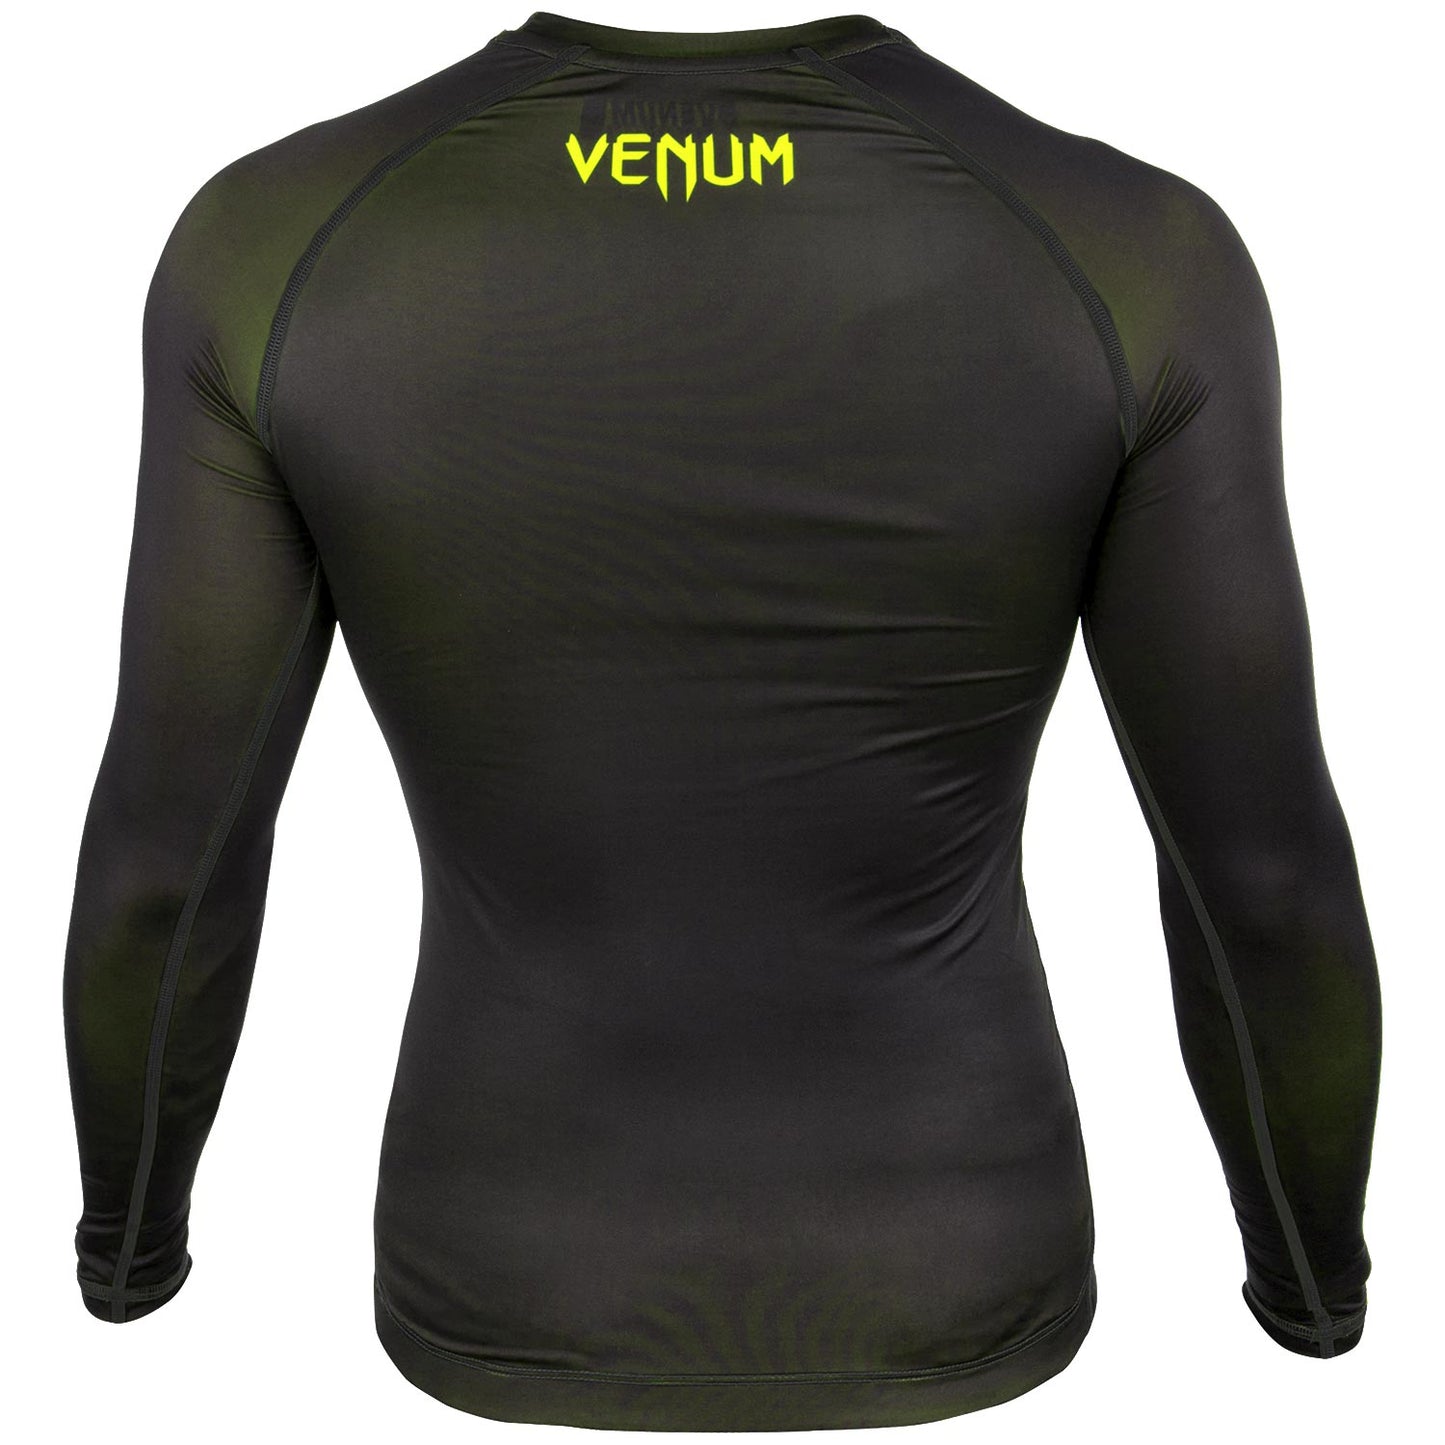 Camiseta de Compresión Venum Contender 3.0  - Mangas Largas - Negro/Amarillo Fluo